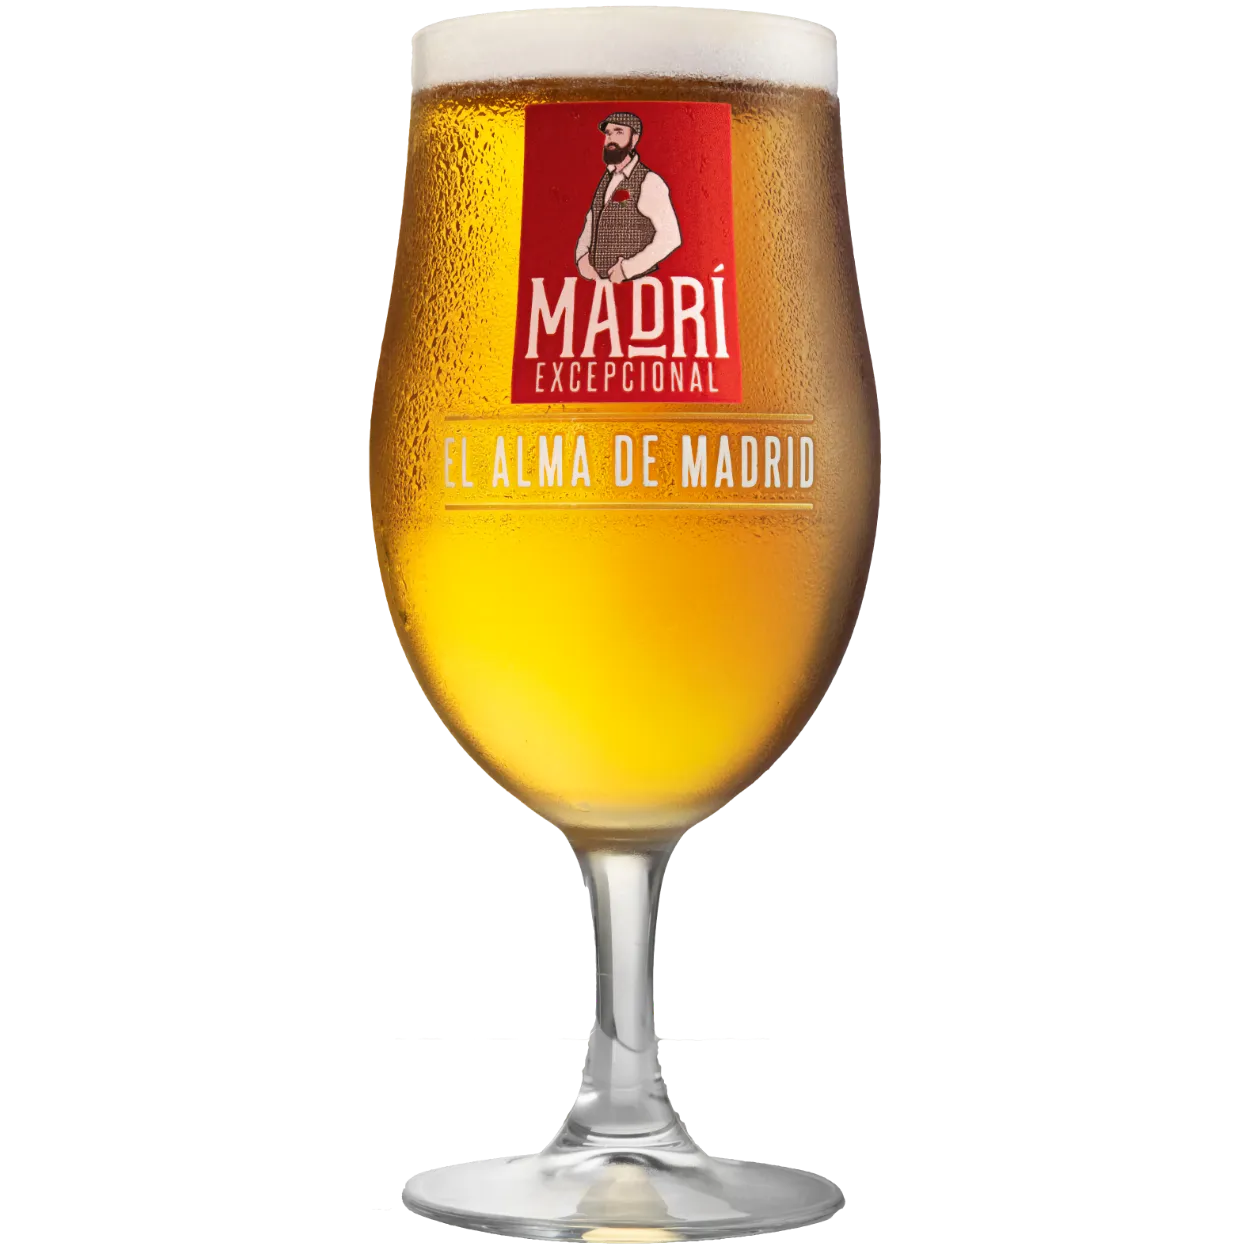 Free Pint Of Madrí Excepcional